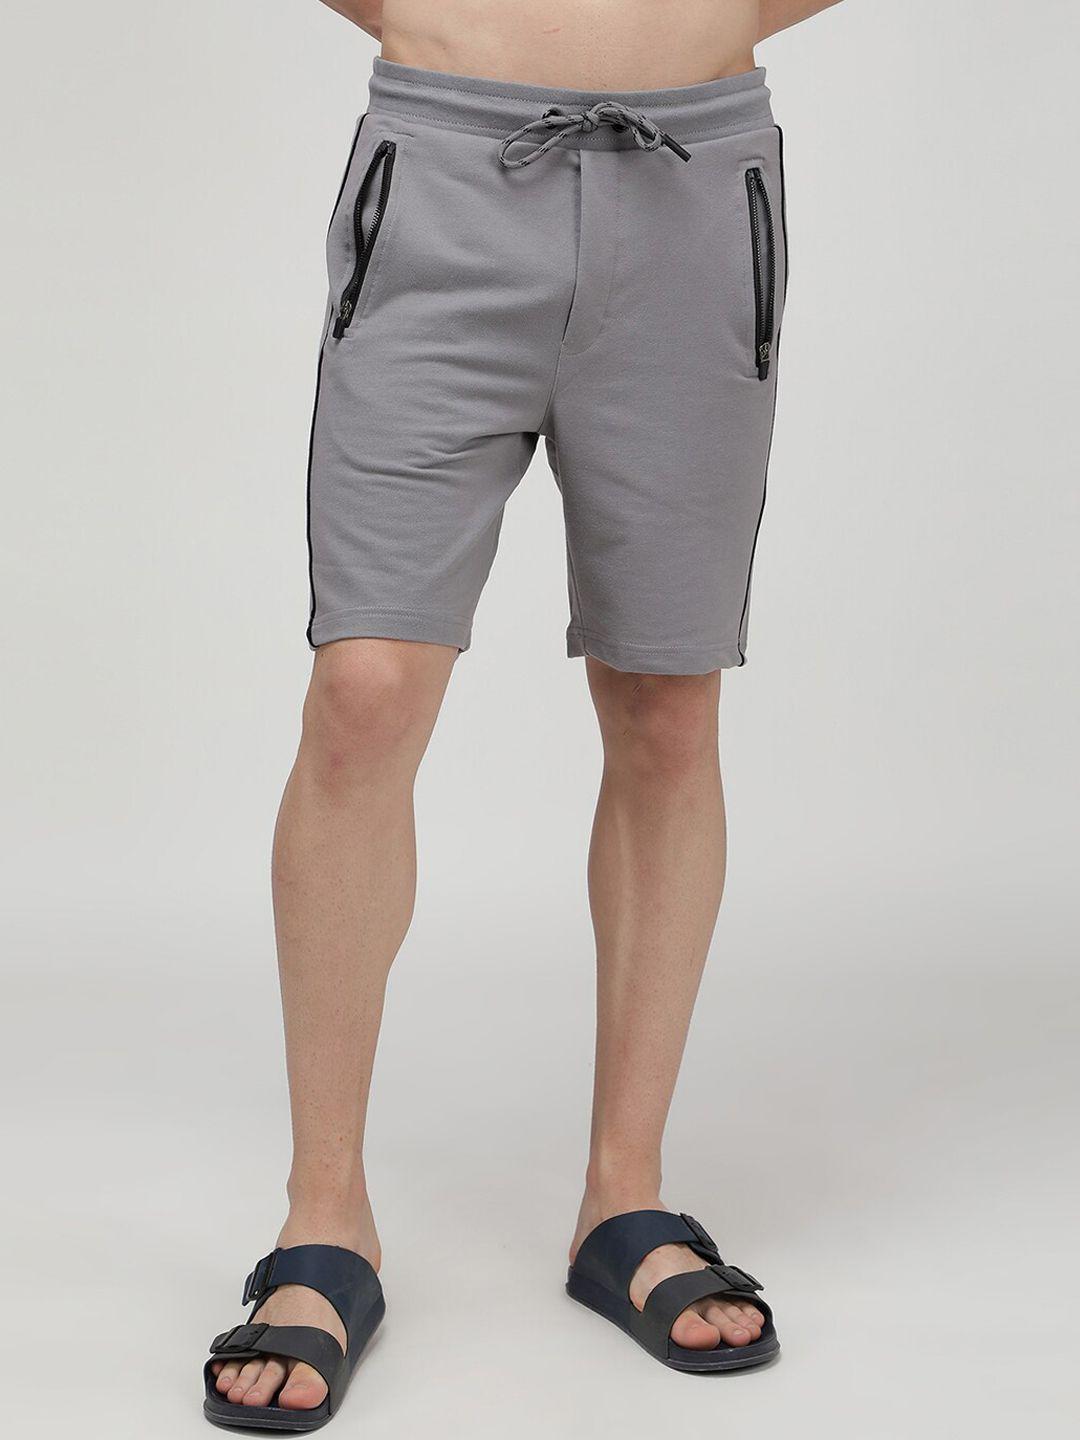 sporto-men-mid-rise-cotton-outdoor-regular-shorts